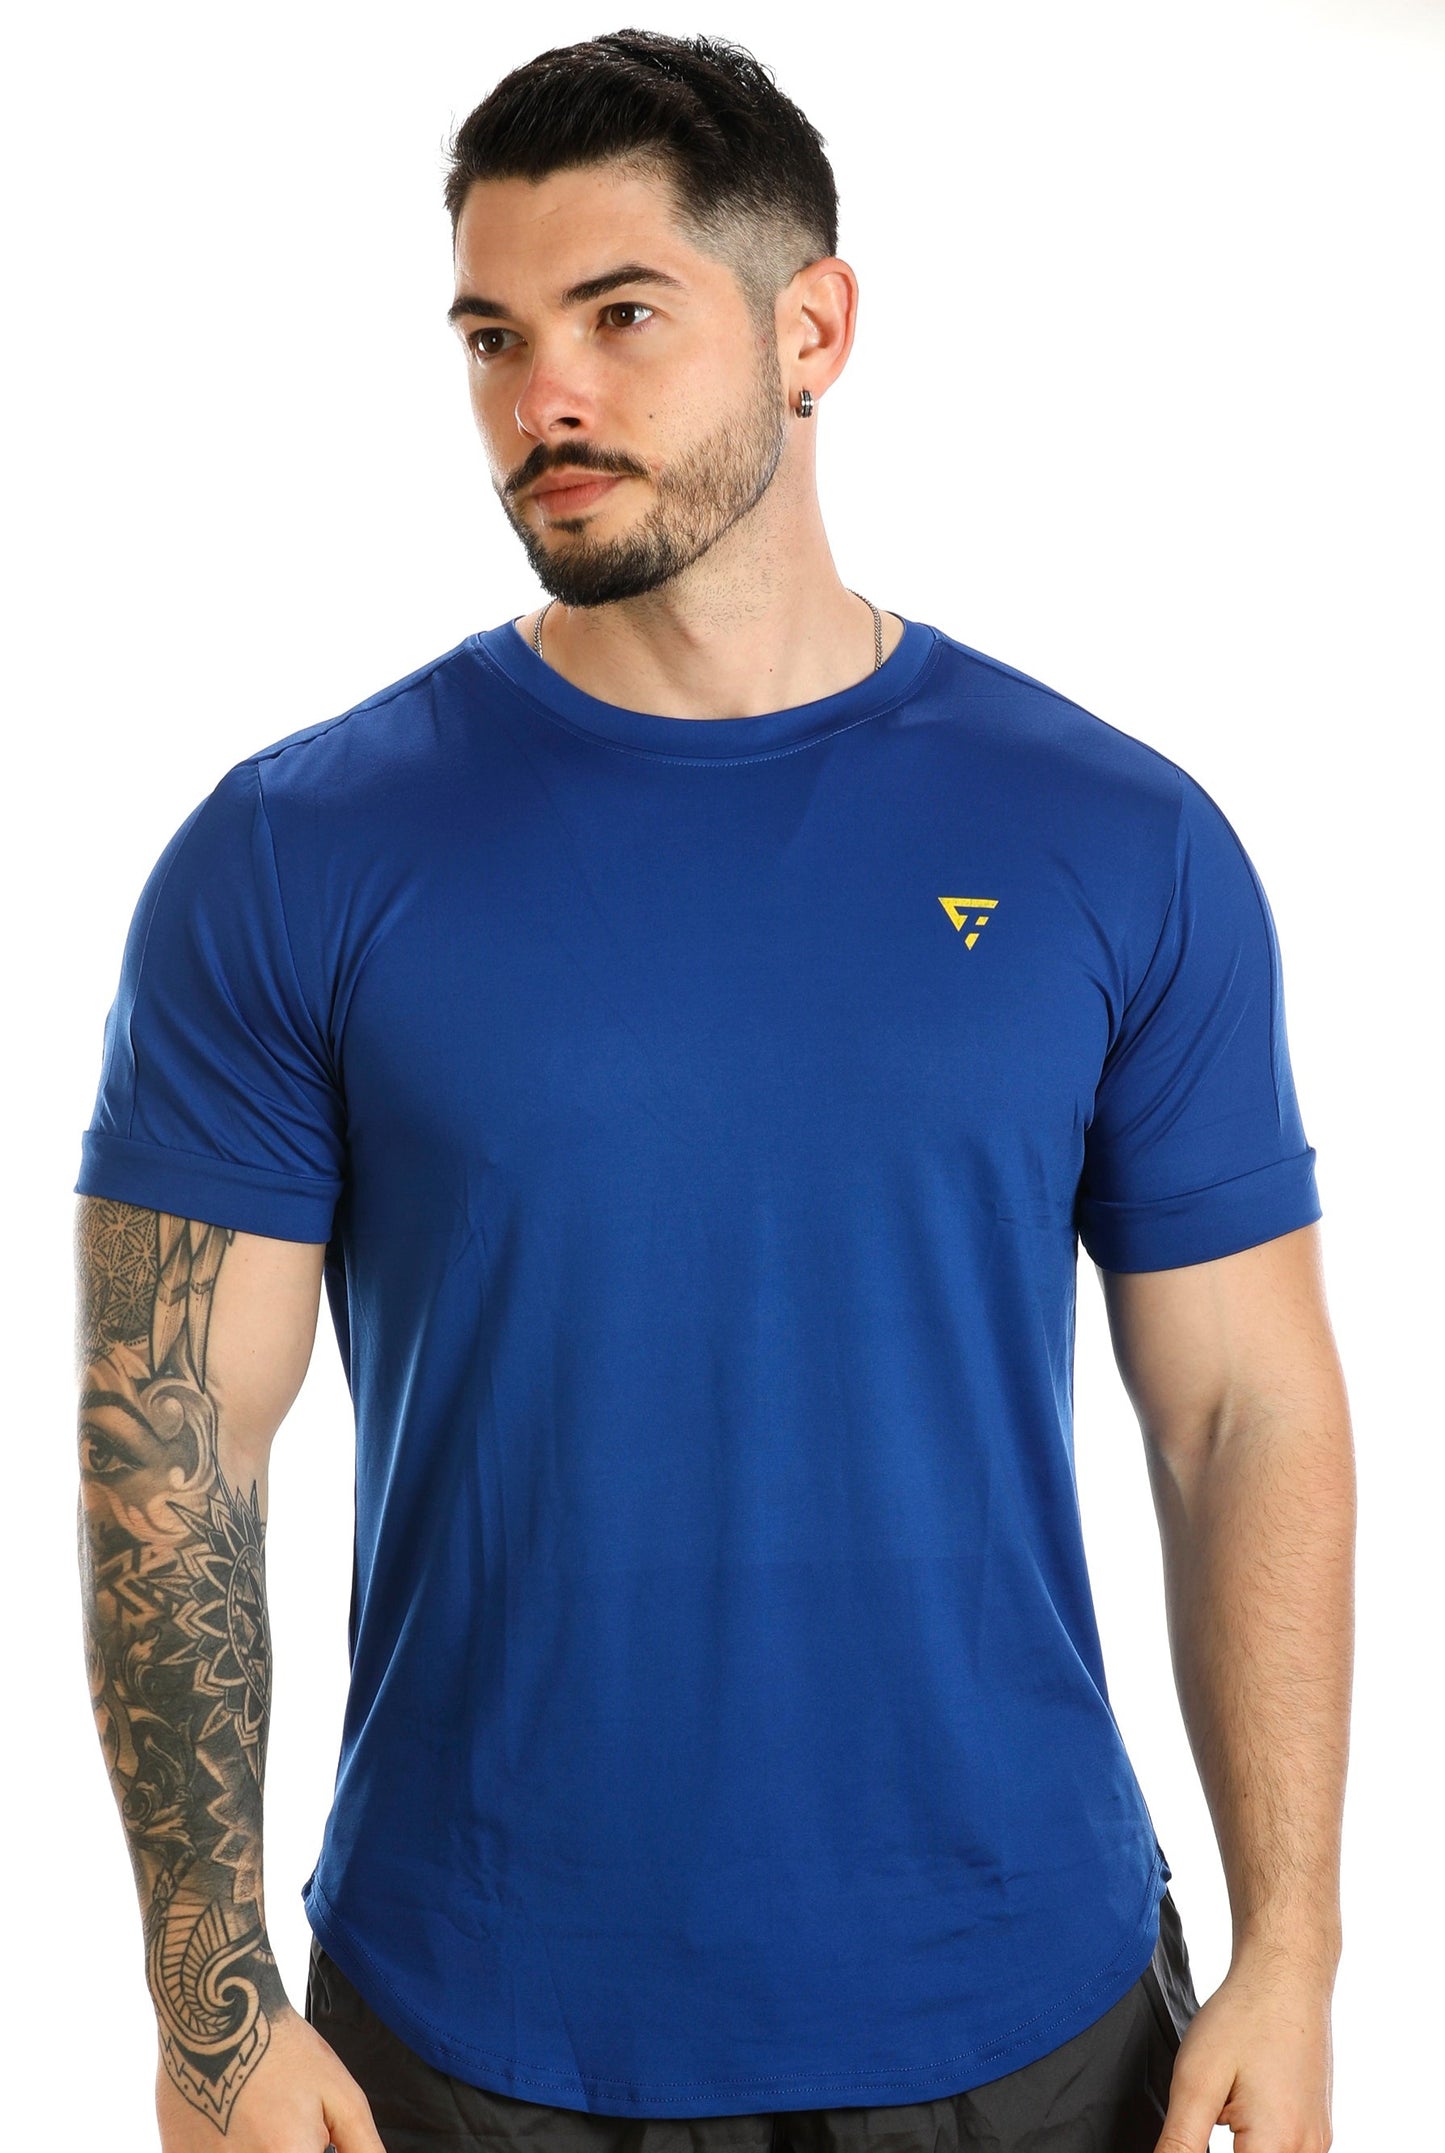 ARES stretch t-shirt (blue)